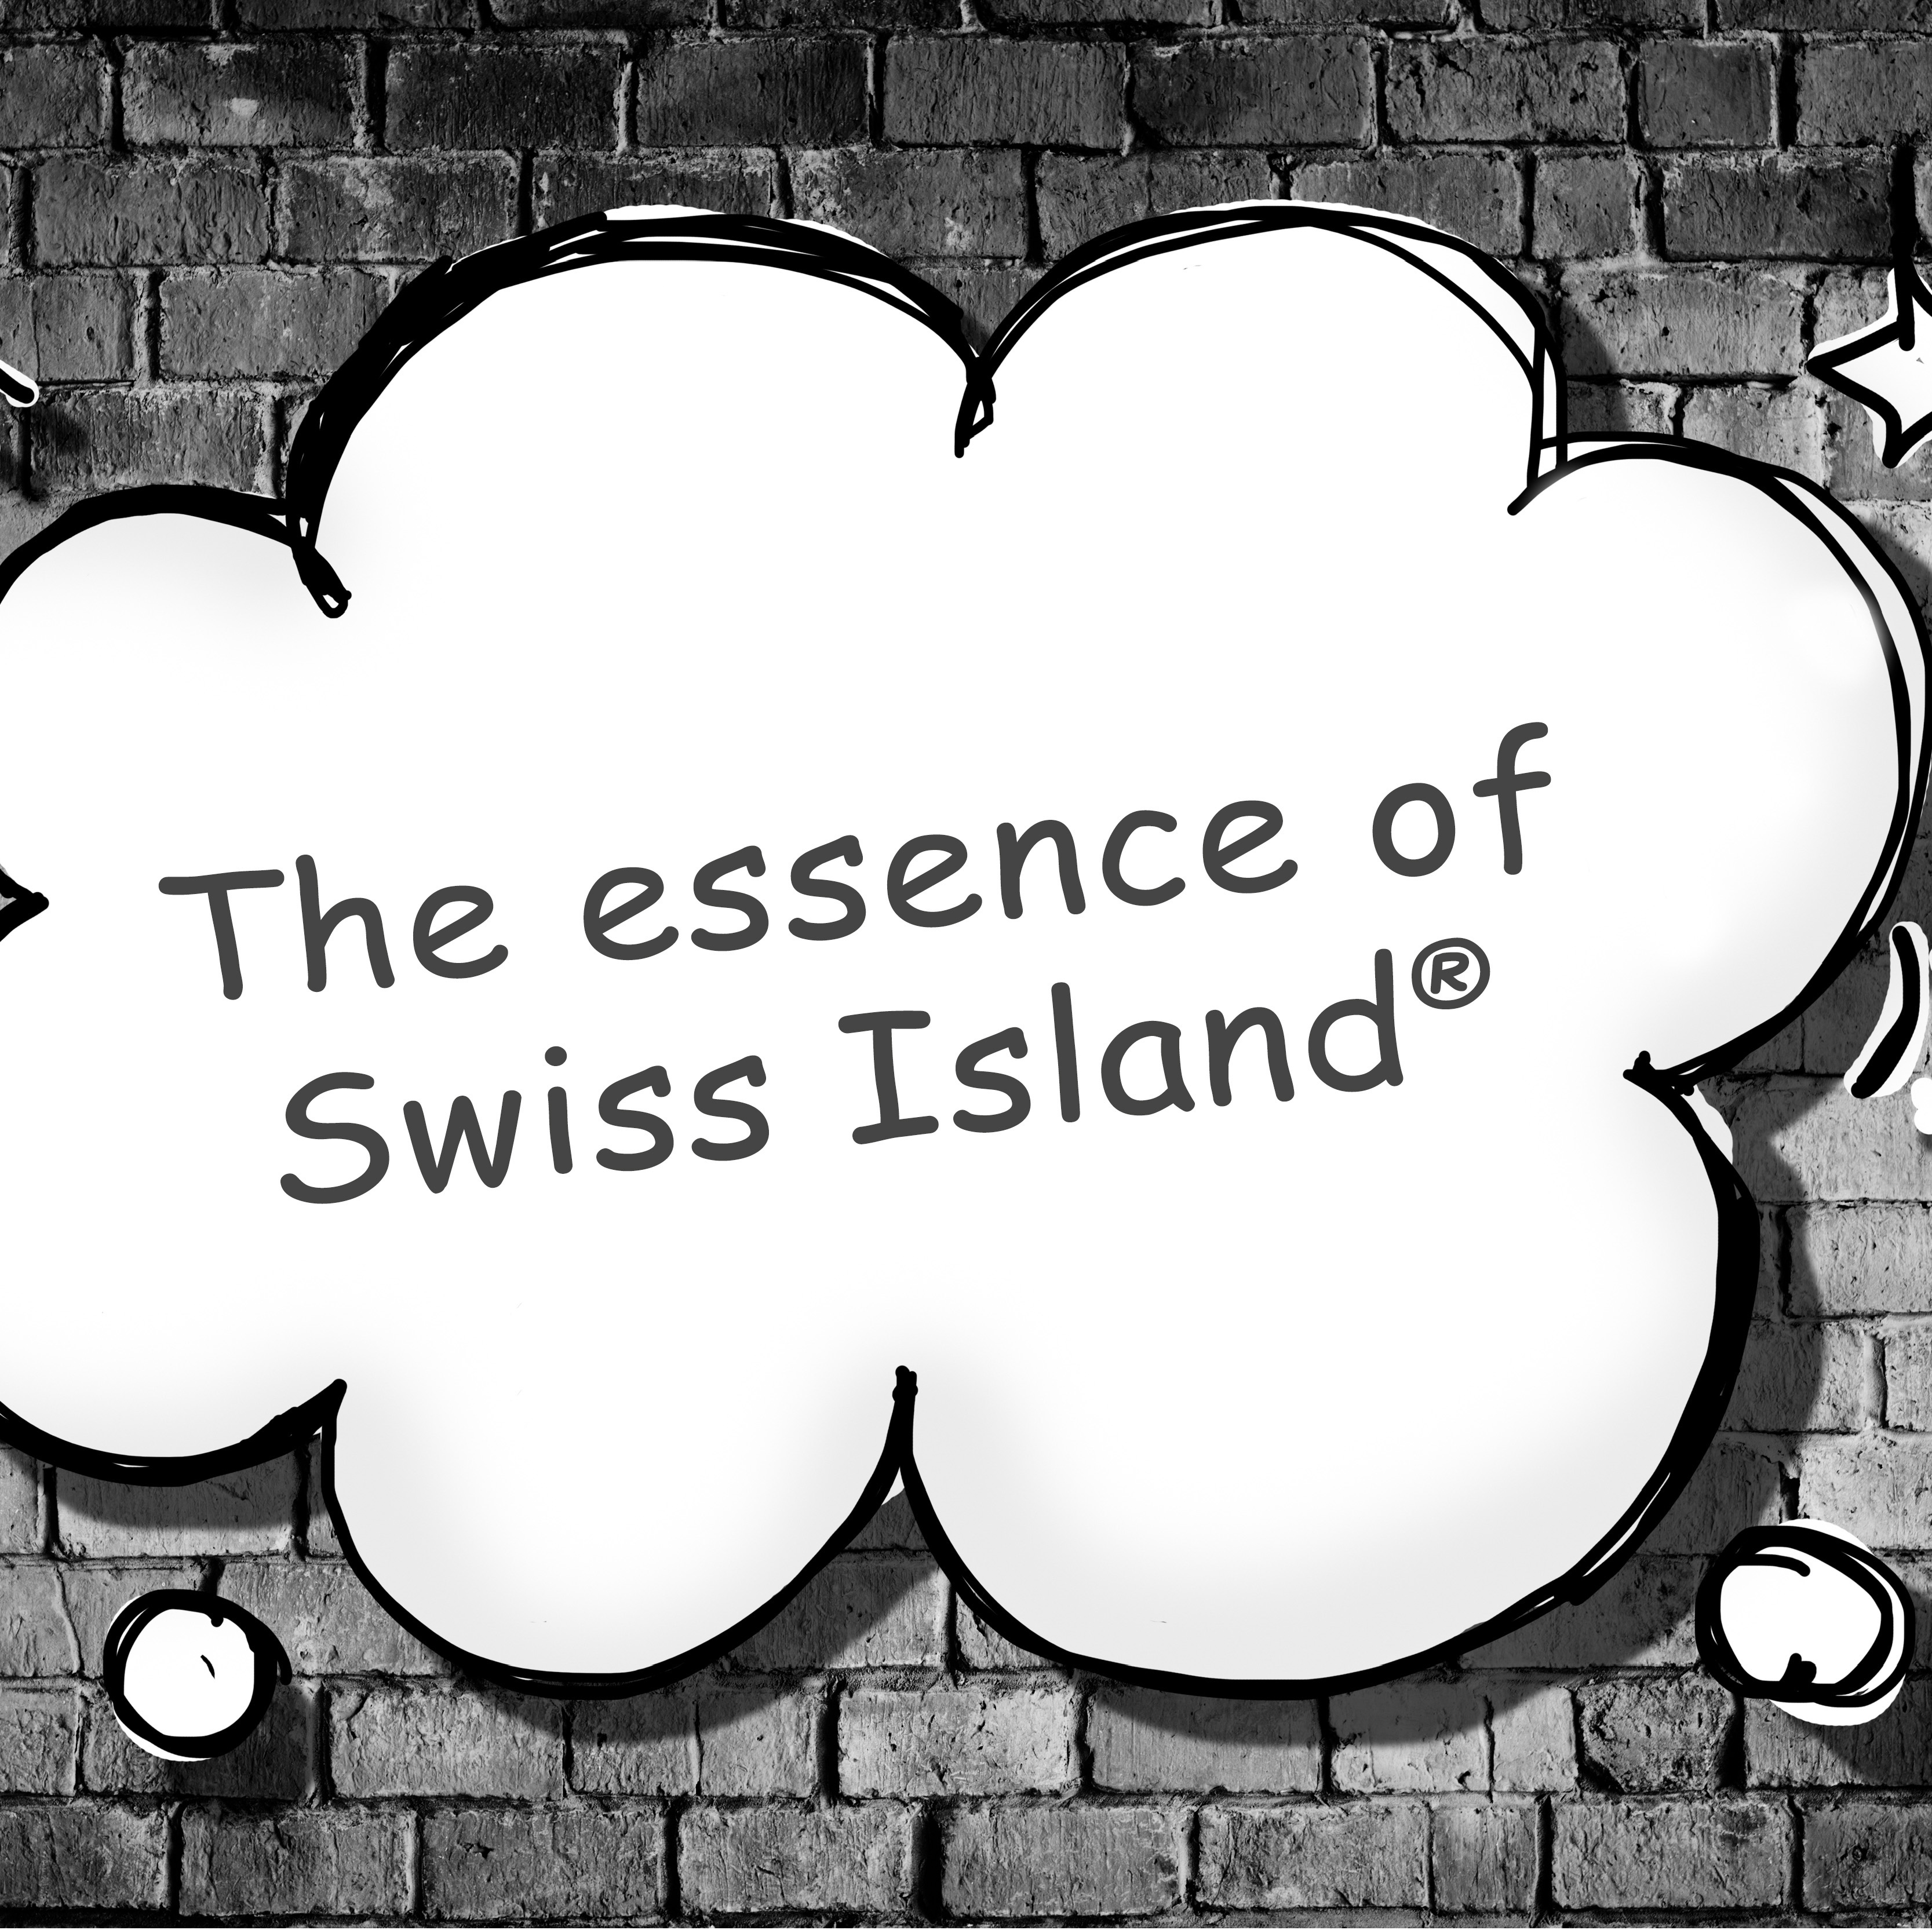 The essence of Swiss Island